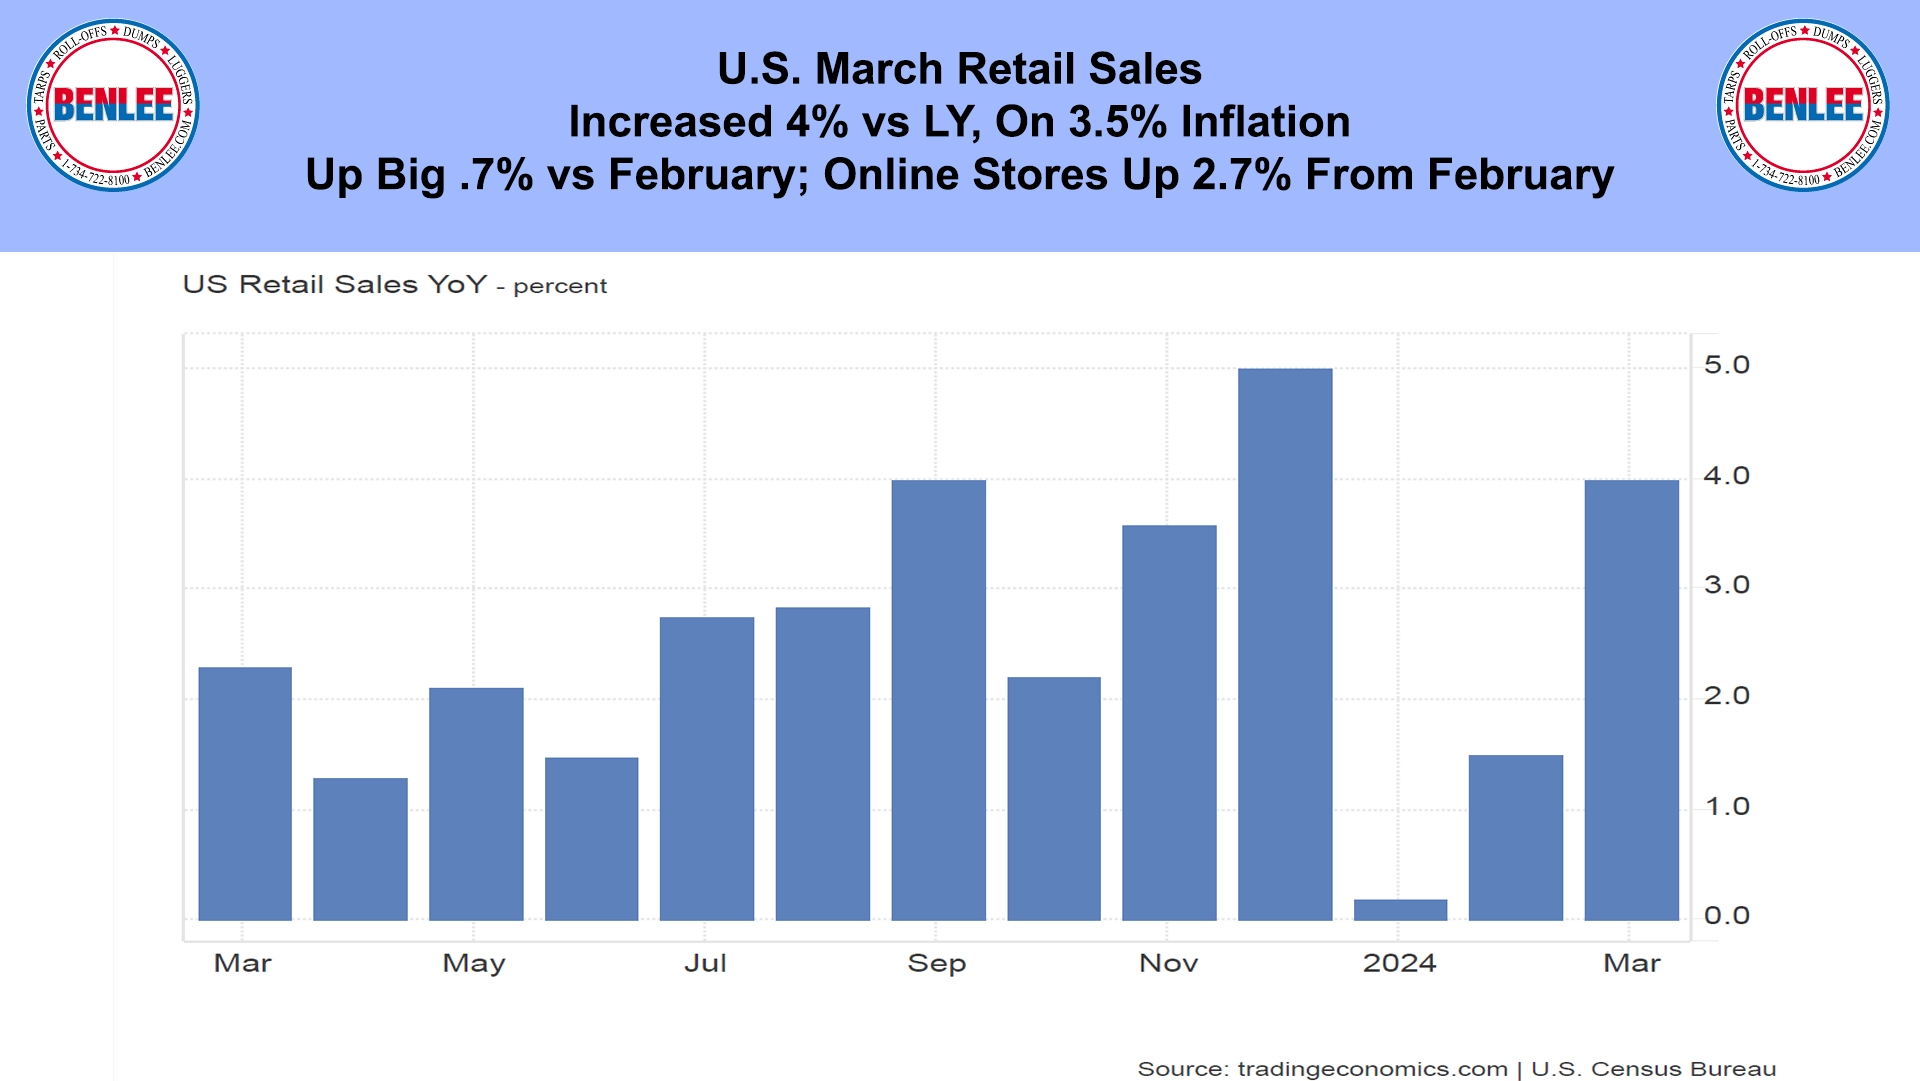 U.S. March Retail Sales